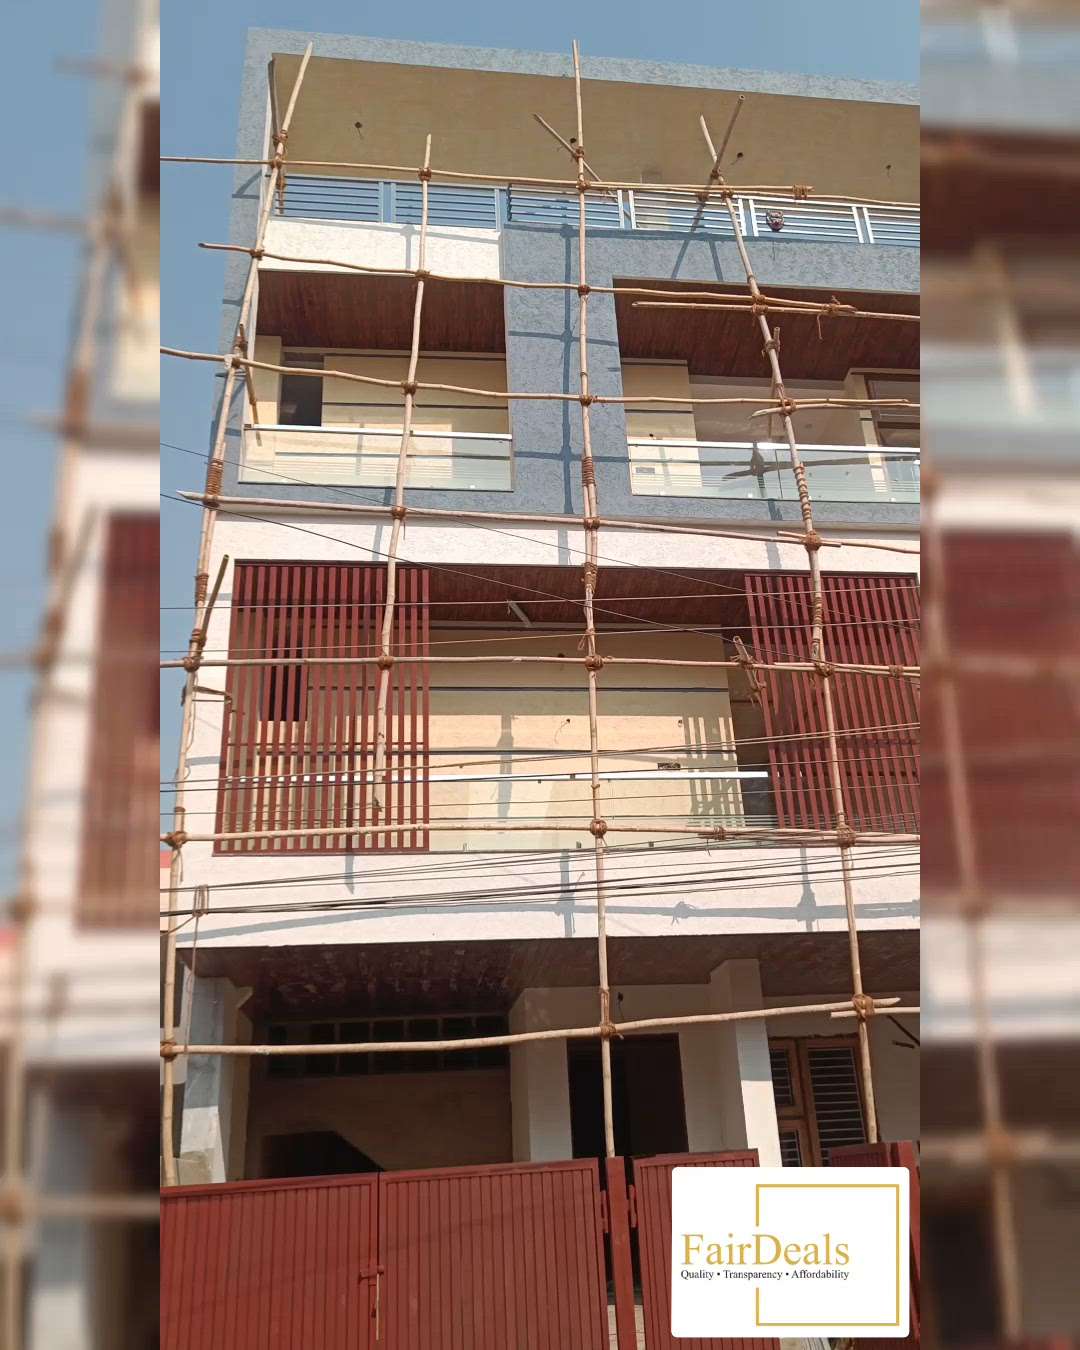 PVC Ceiling Panel Installed By FairDeals
Contact Us - 8107940665
                       7878443883

#fairdealsjaipur #fairdeals #HomeAutomation #ElevationHome #ElevationDesign #HomeDecor #Architect #architecturedesigns #Architectural&Interior #InteriorDesigner #LUXURY_INTERIOR #PVCFalseCeiling #Pvc #Pvcpanel #pvcwallpanel #pvcpanelinstallation #pvcdesign #wallpannel #HouseDesigns #ContemporaryHouse #WoodenBalcony #BalconyCelingDesign #jaipurdiaries #jaipuri #jaipurcity #jaipurblog #jaipurblogger #pinkcity #pinkcityjaipur #jaipur #jaipurcityblog #jaipurite #jaipurphotography #business #sale #Sales #digital #marketing #viral_design_wallpaper #viralkolo #kolohindi #koloapp #trendingdesign #hometour #rajasthandiaries #rajasthan #interior_designer_in_rajasthan #interiorcontractor #CivilEngineer #HouseConstruction #jodhpur #udaipur #jaisalmer #alwar #alwararchitect #sikar #churu #sikararchitect #vaishalinagarjaipur #mansarovar #rajapark #malviyanagarjaipur #jhotwarajaipur #jhotwara